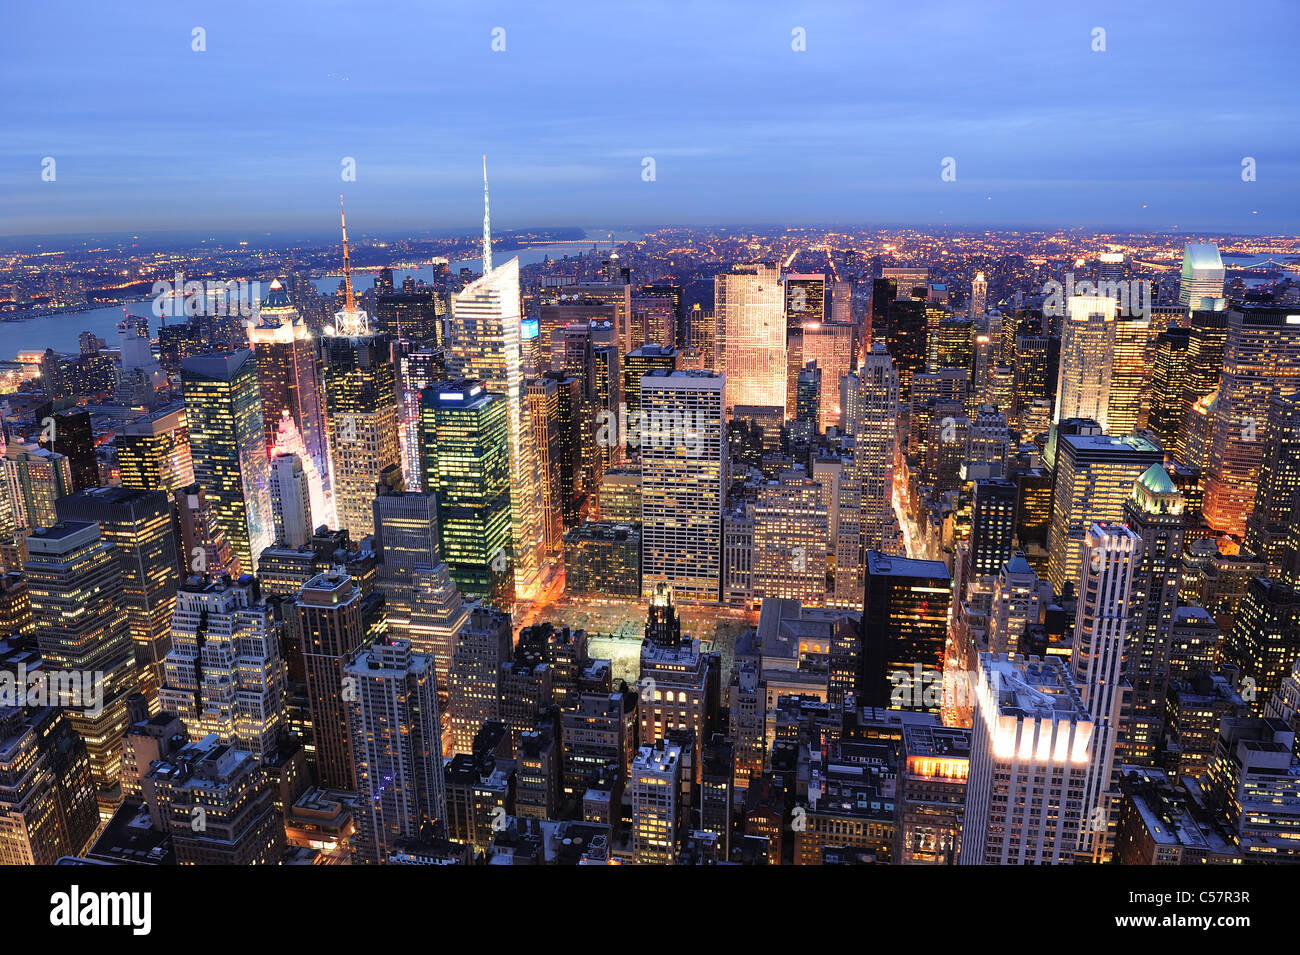 New York City Manhattan Times Square night city skyline aerial view with urban skyscraper illuminated. Stock Photo